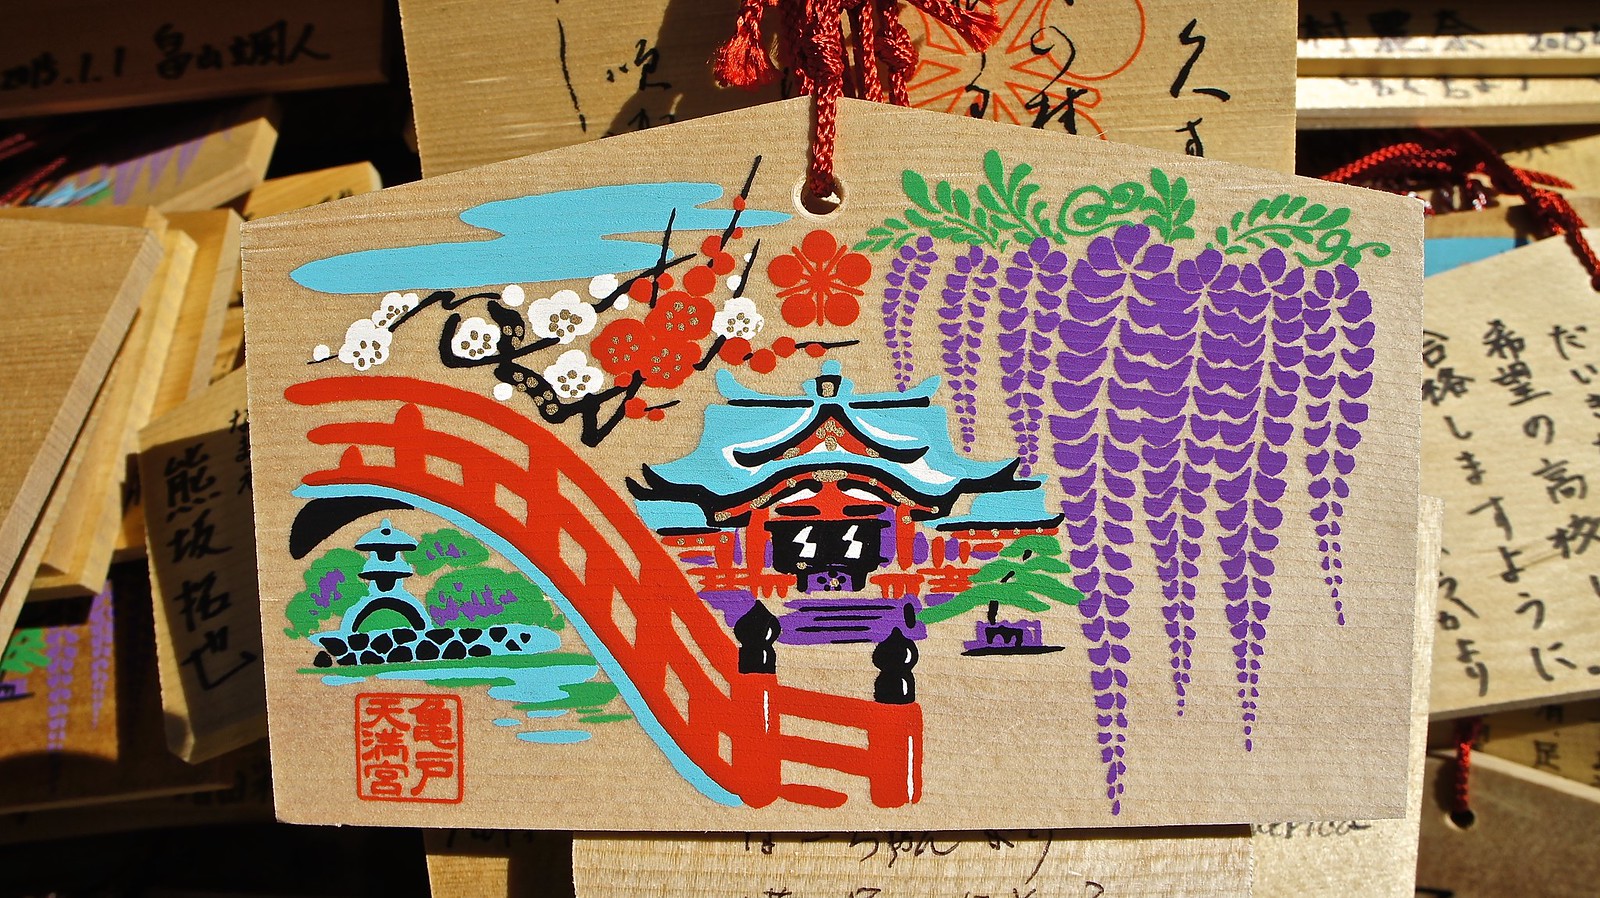 Ema hung at the Kameido Tenman Shrine depicting Wisteria, plums and Sakura